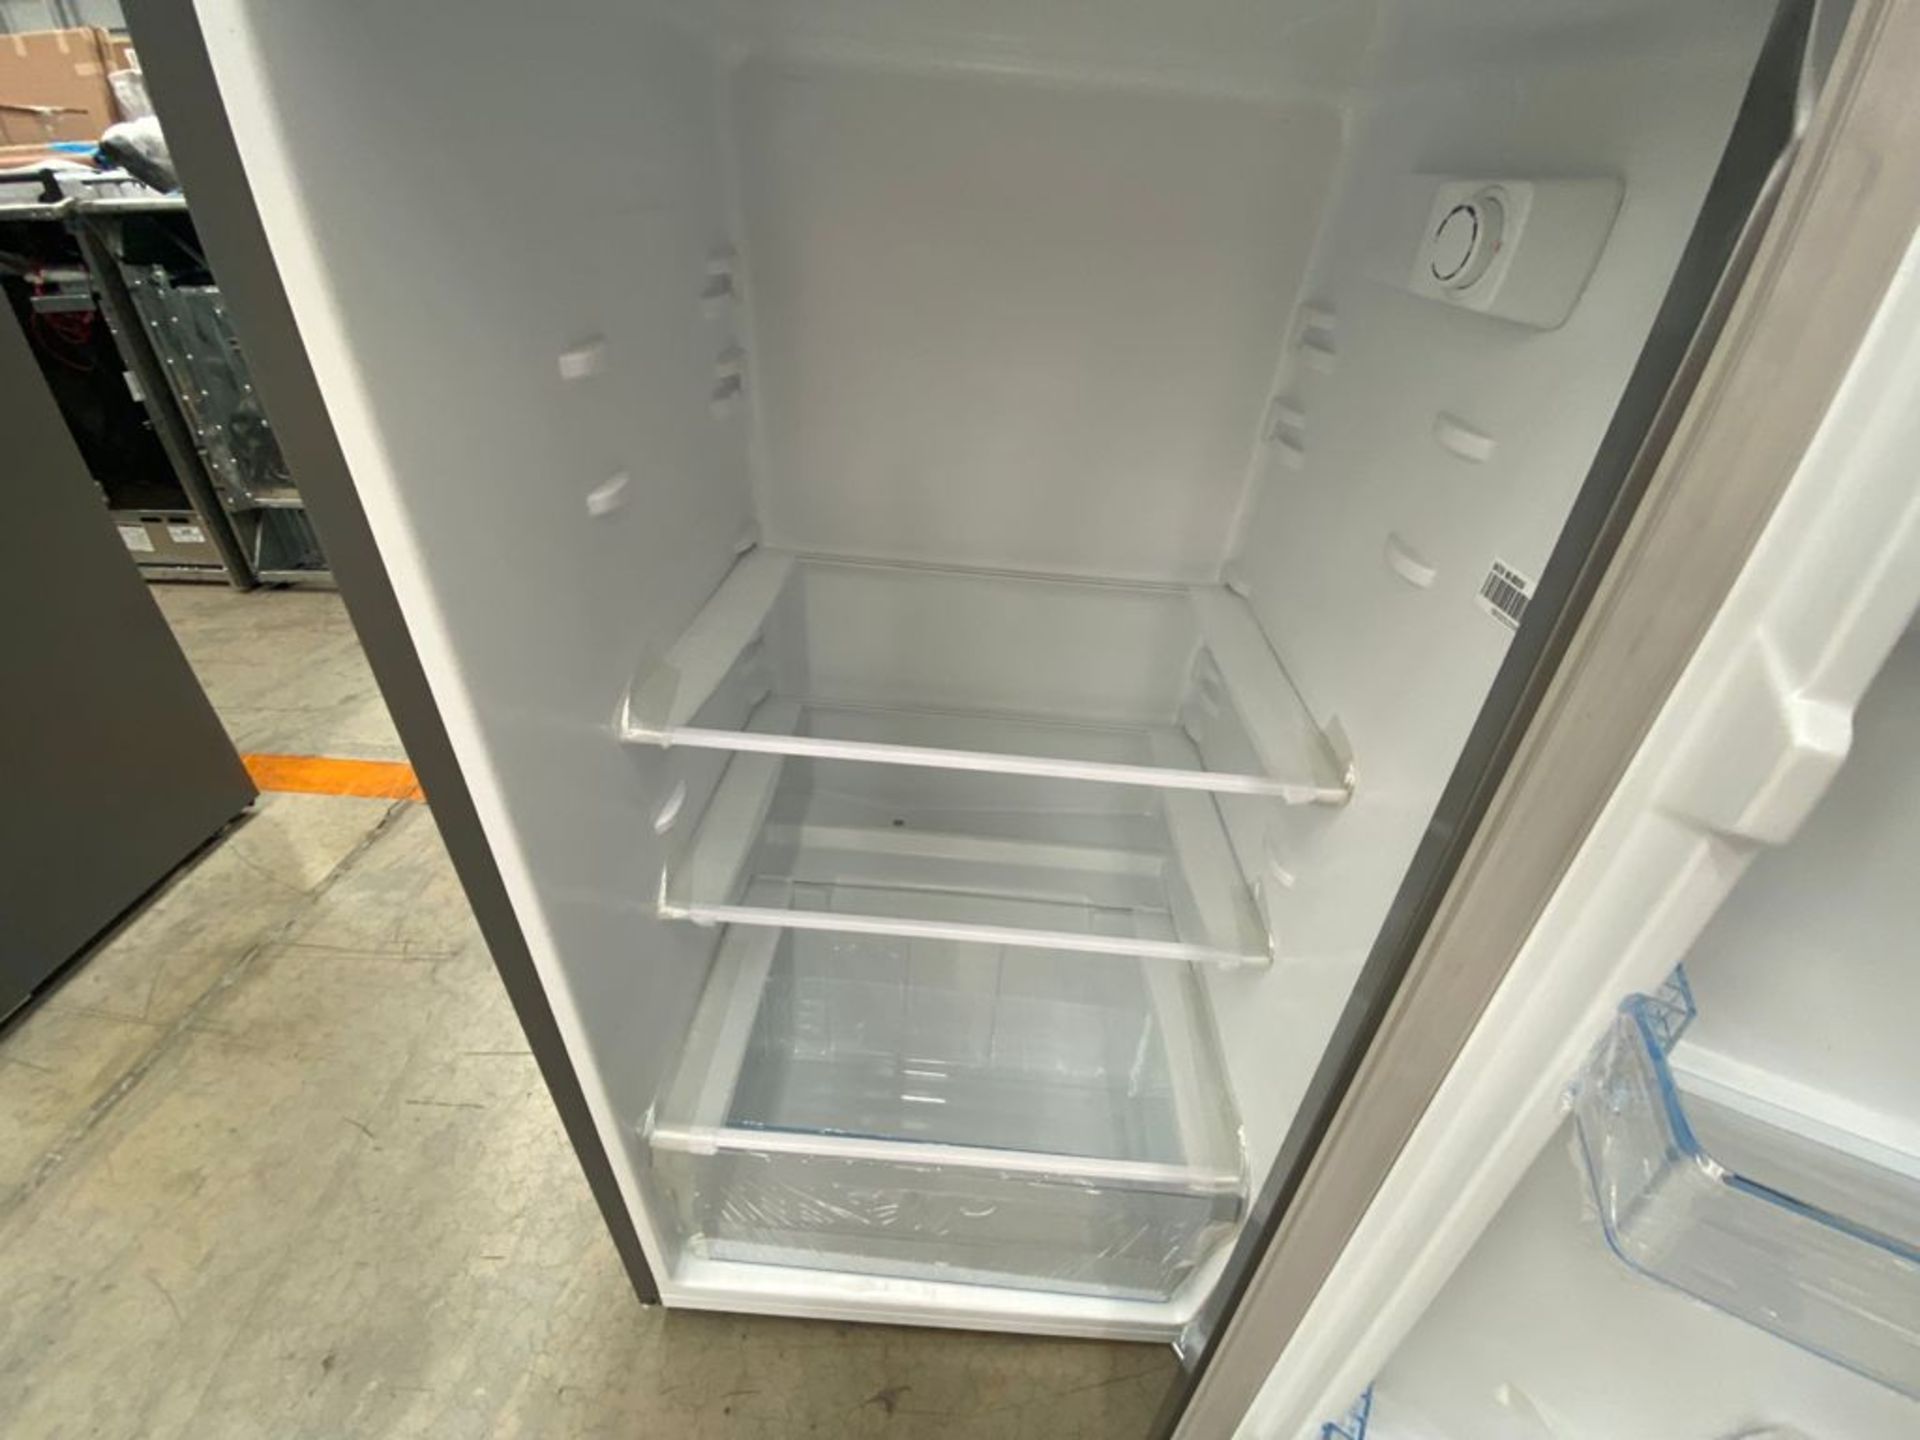 2 Refrigeradores marca Hisense color gris modelo RT80D6AWX - Image 23 of 28